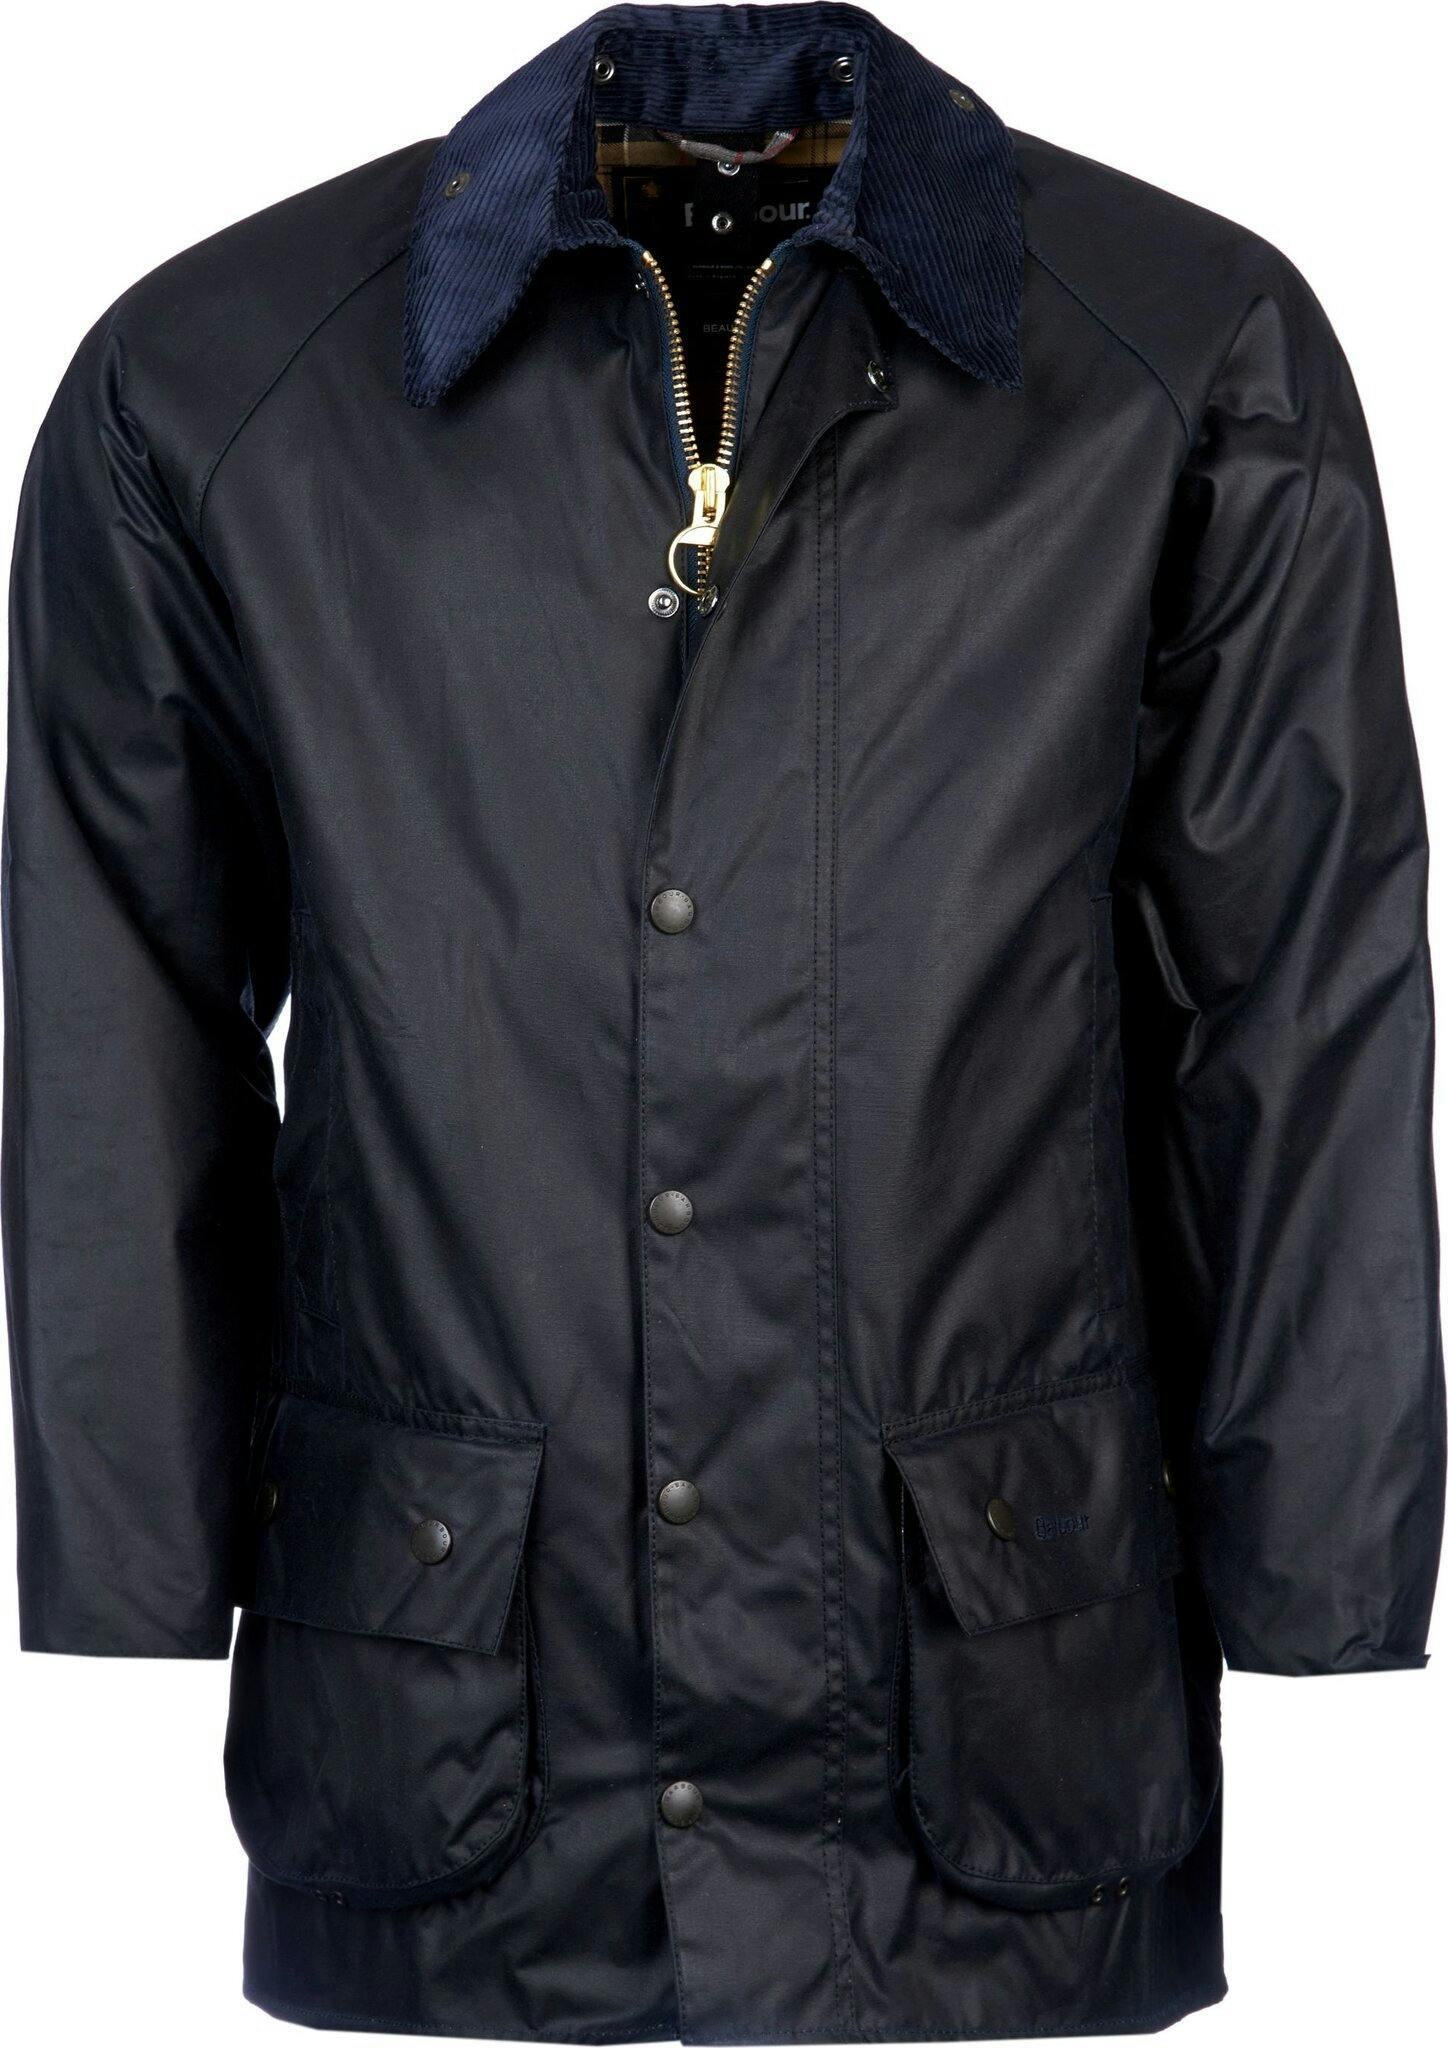 Product image for Beaufort Wax Jacket - Men's